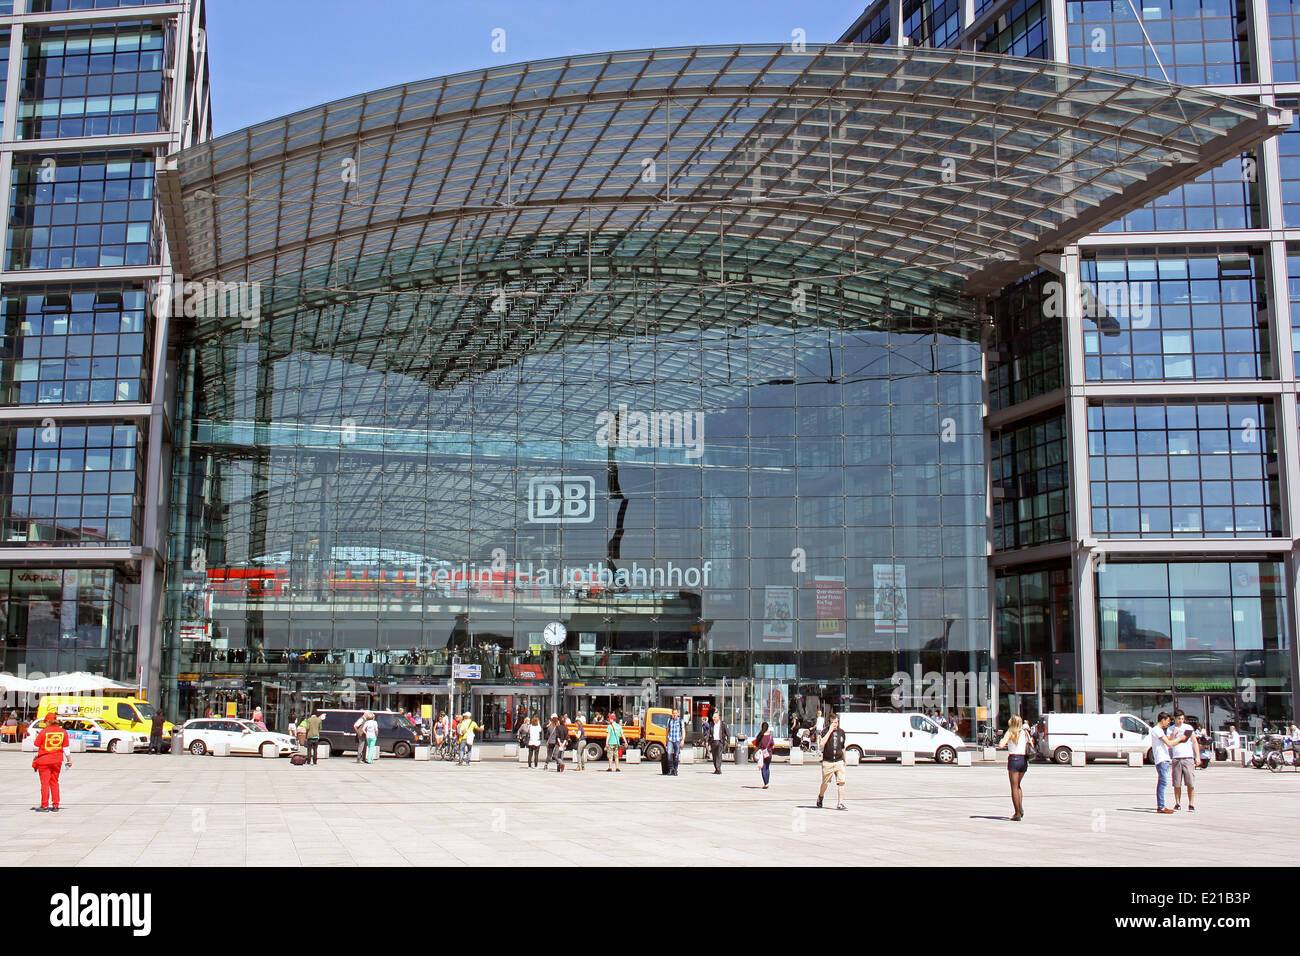 Berlin Hbf, Hauptbahnhof, Main railway station Stock Photo